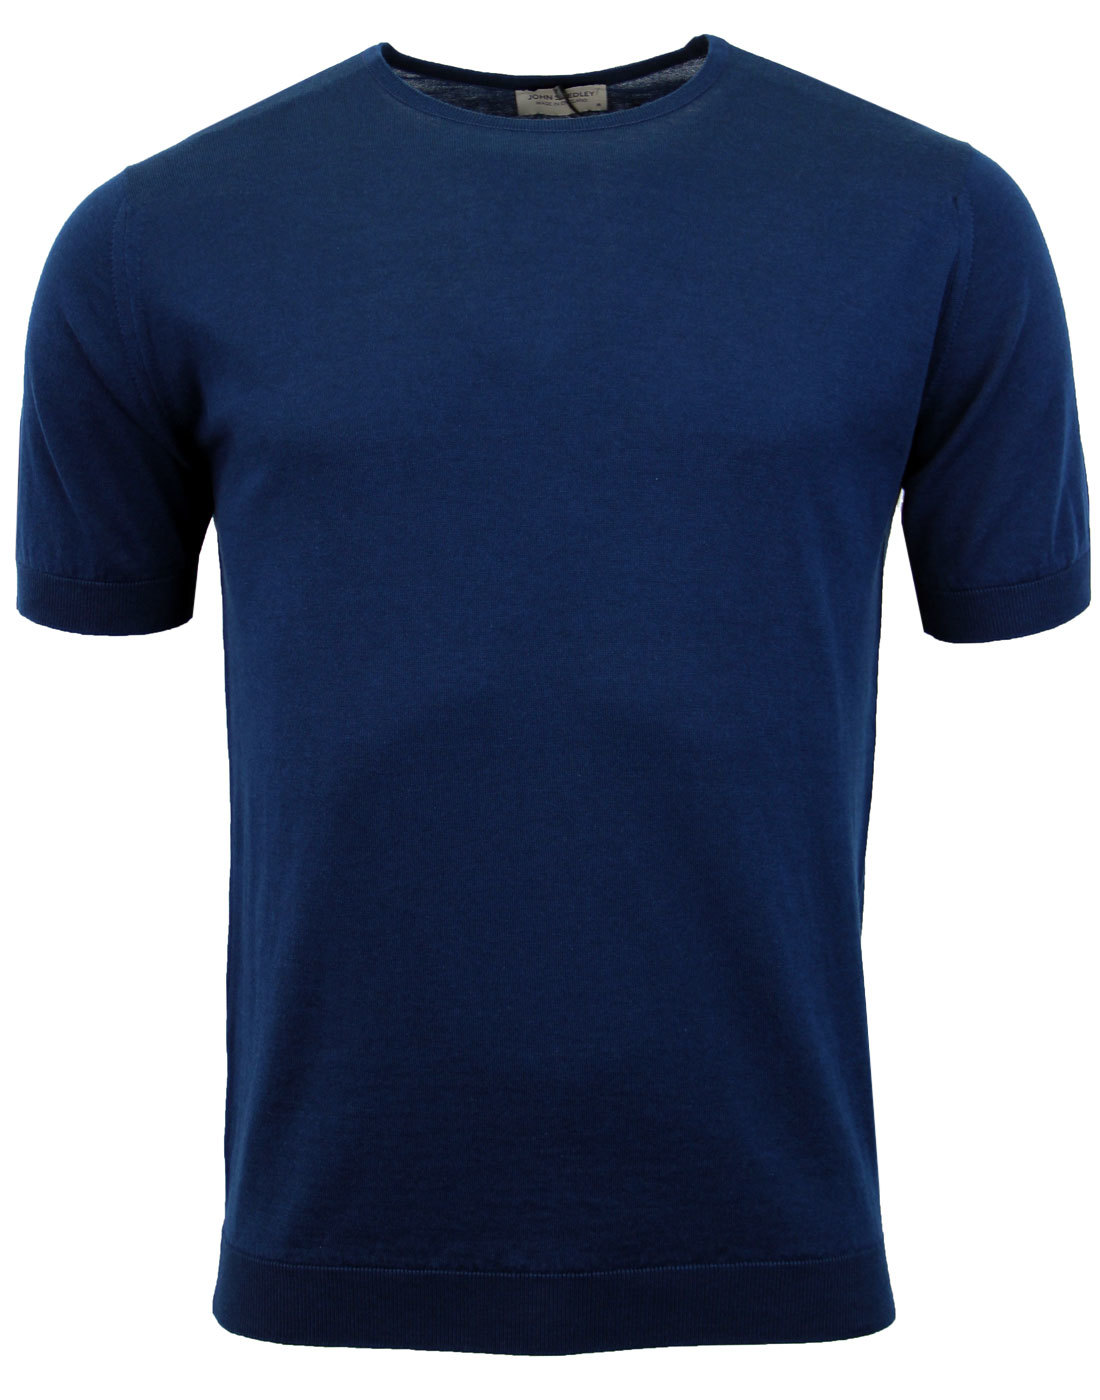 JOHN SMEDLEY Belden Retro Mod Made in England Knit T-Shirt Indigo